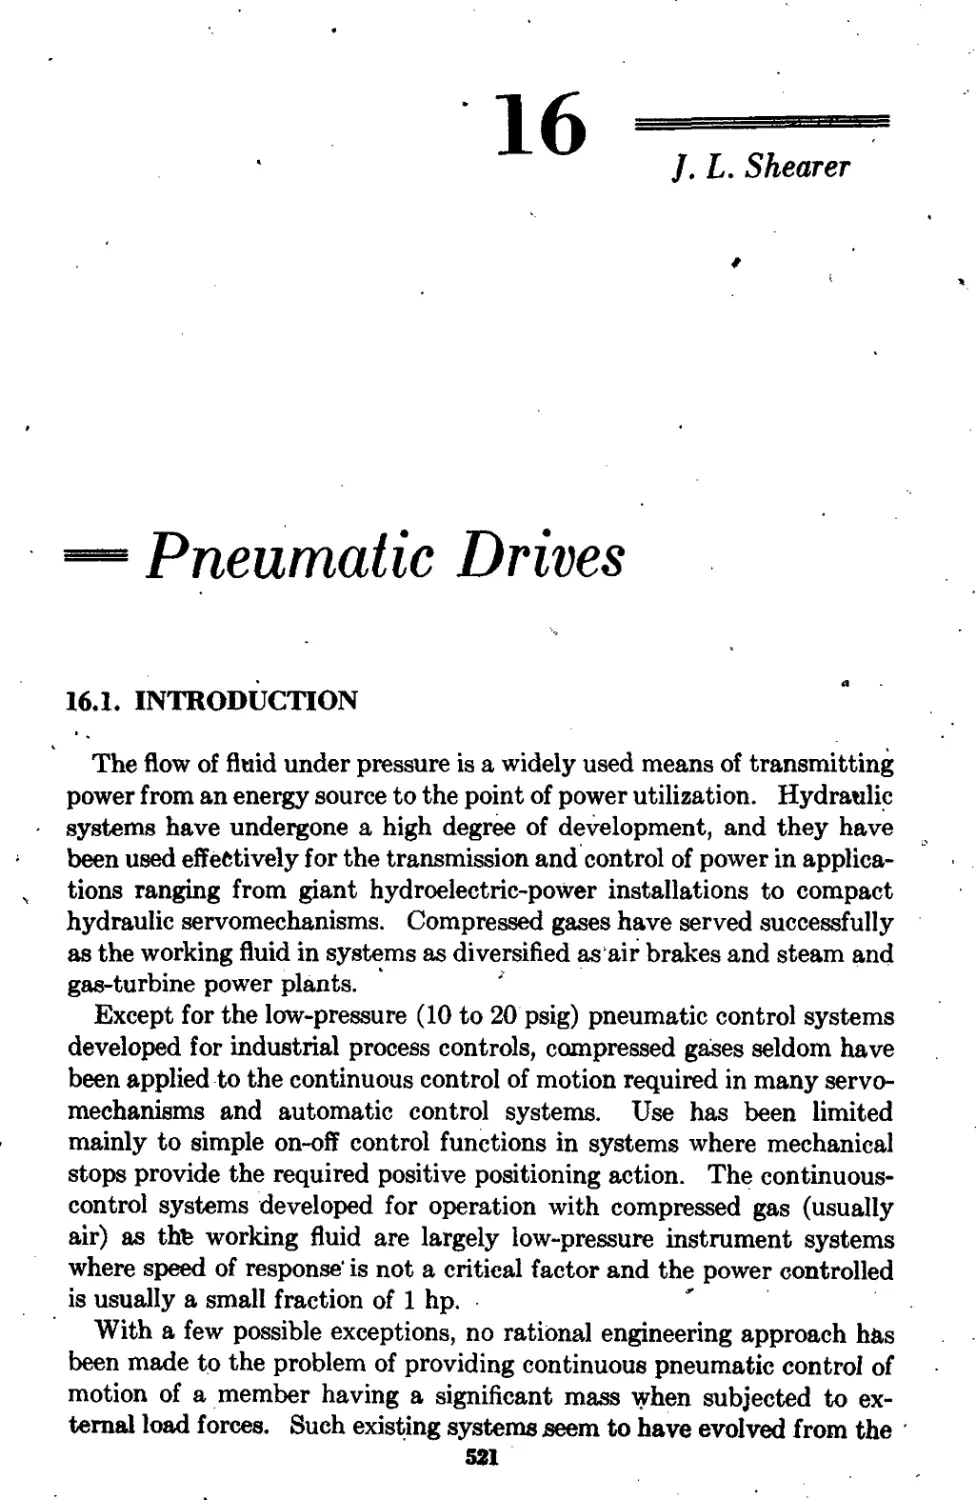 Chapter 16 Pneumatic Drives: J. L. Shearer